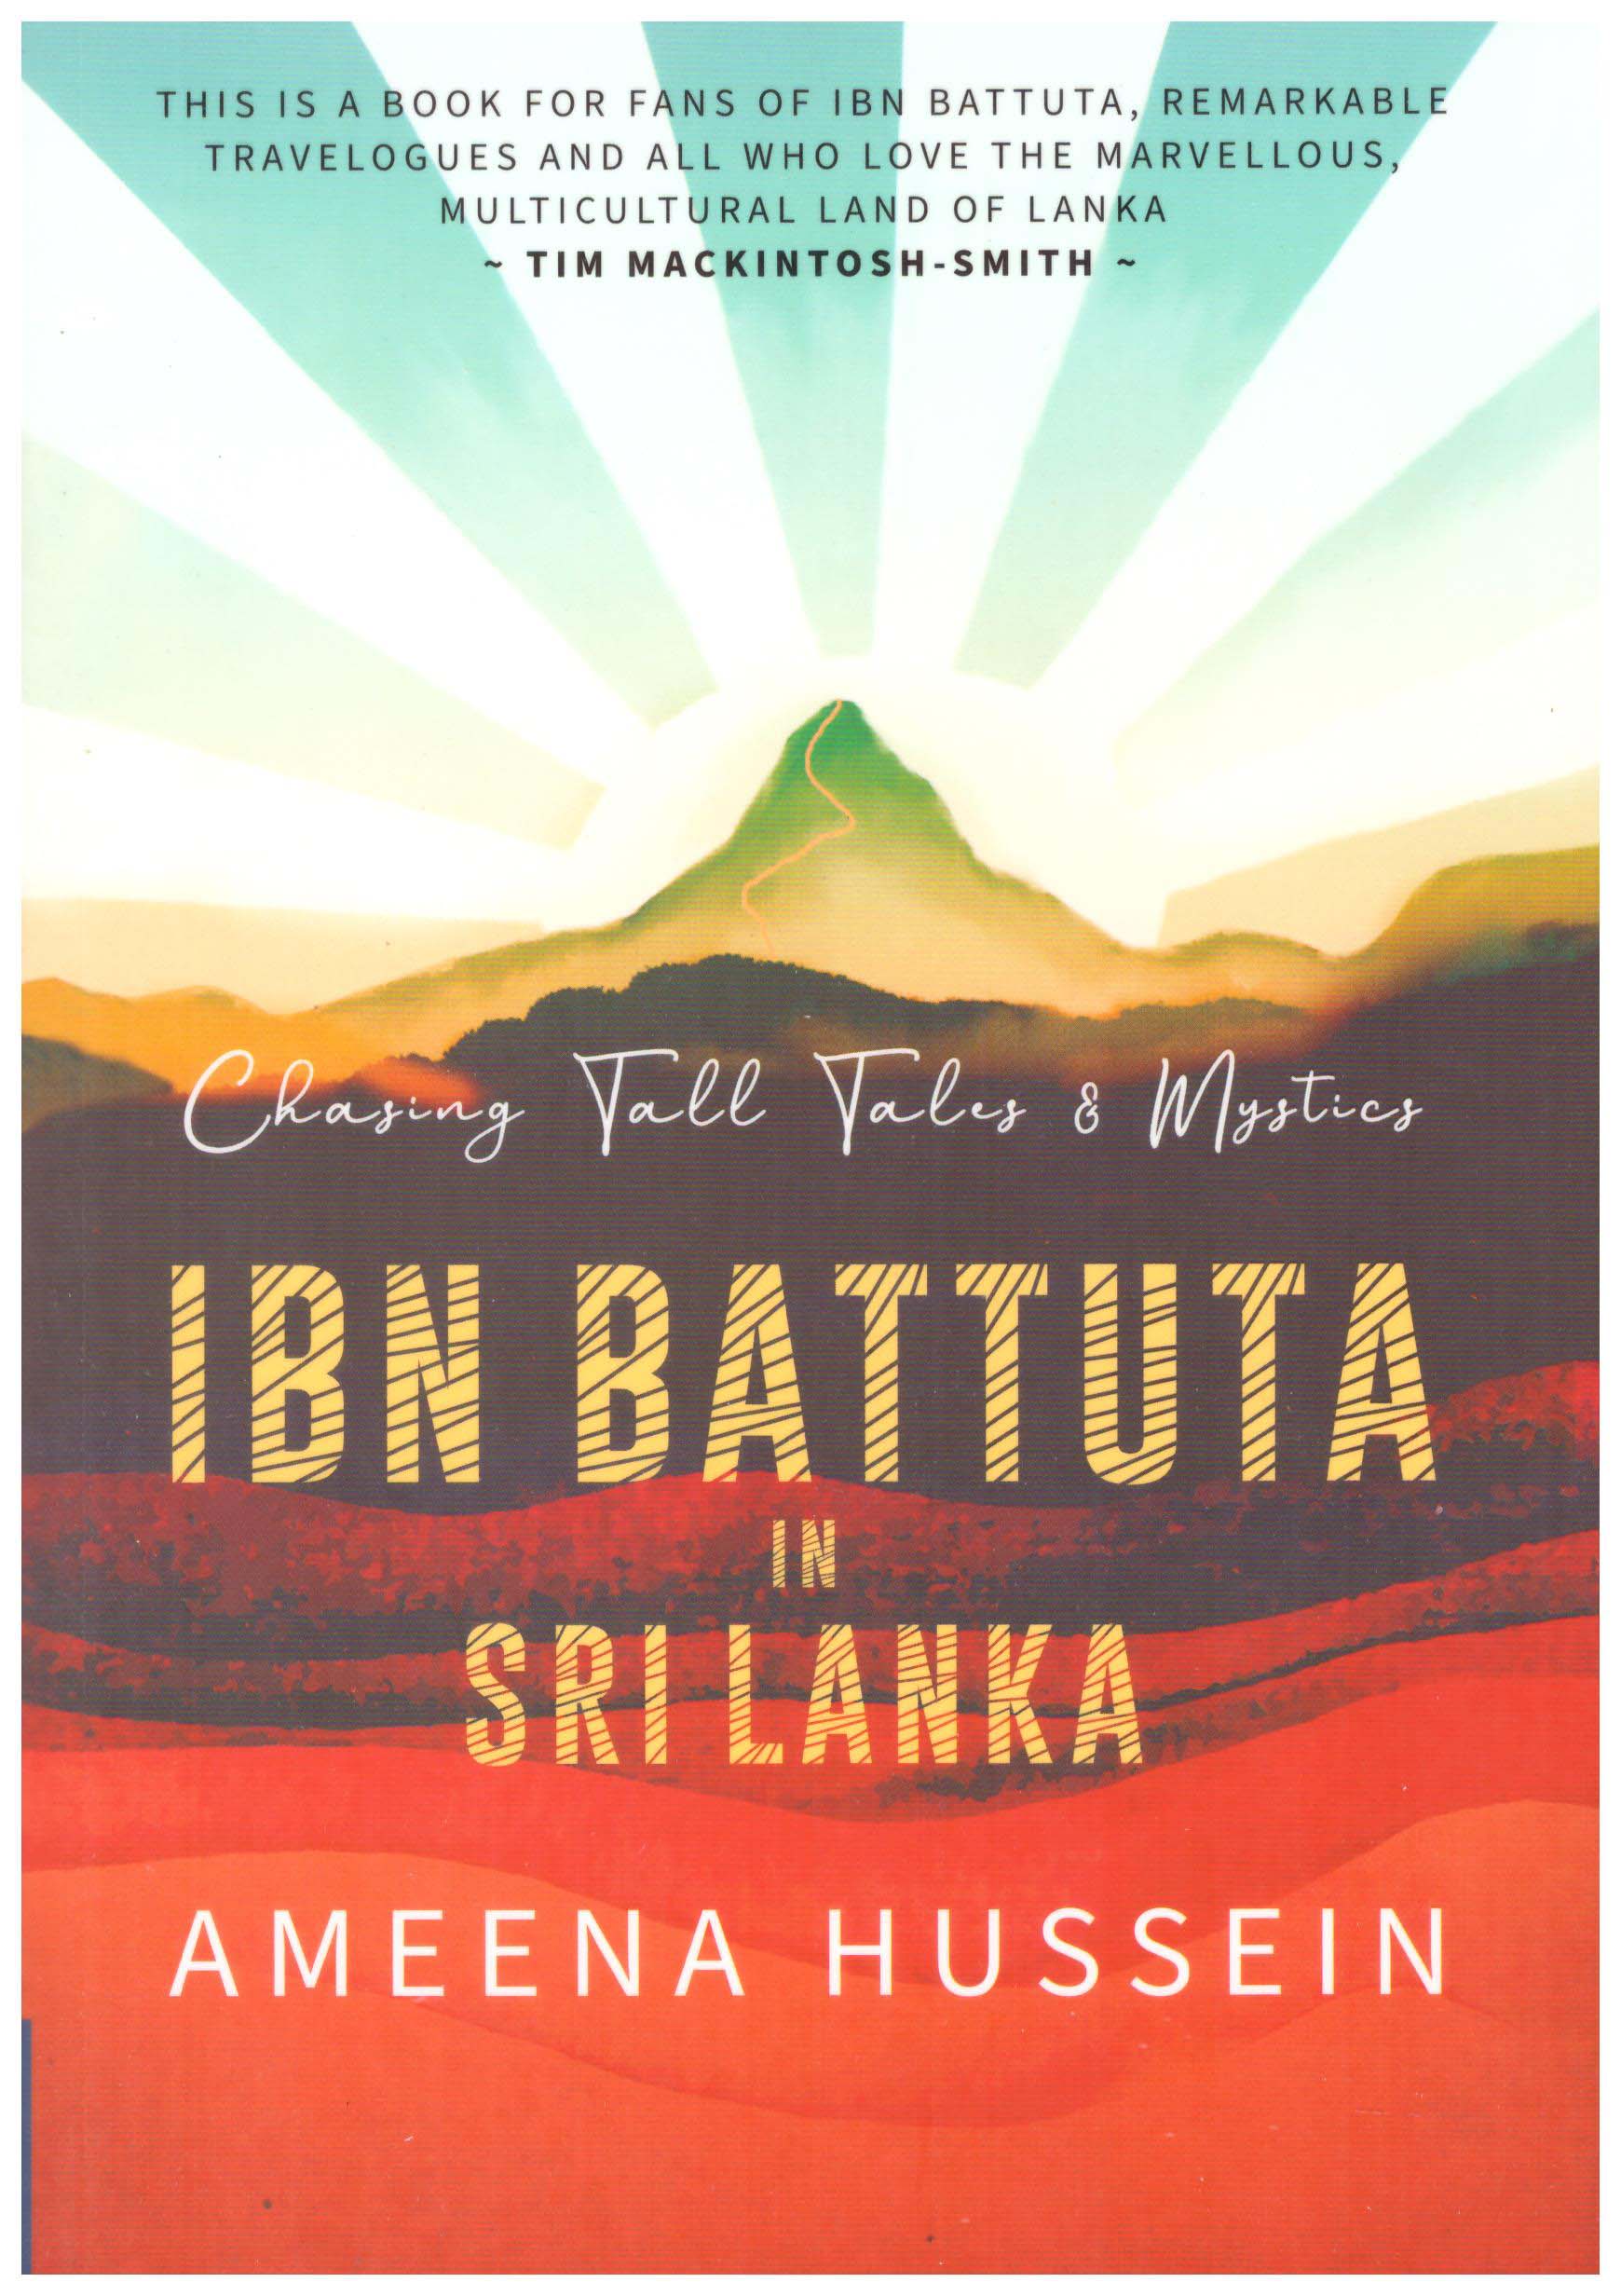 Ibn Battuta in Sri Lanka 